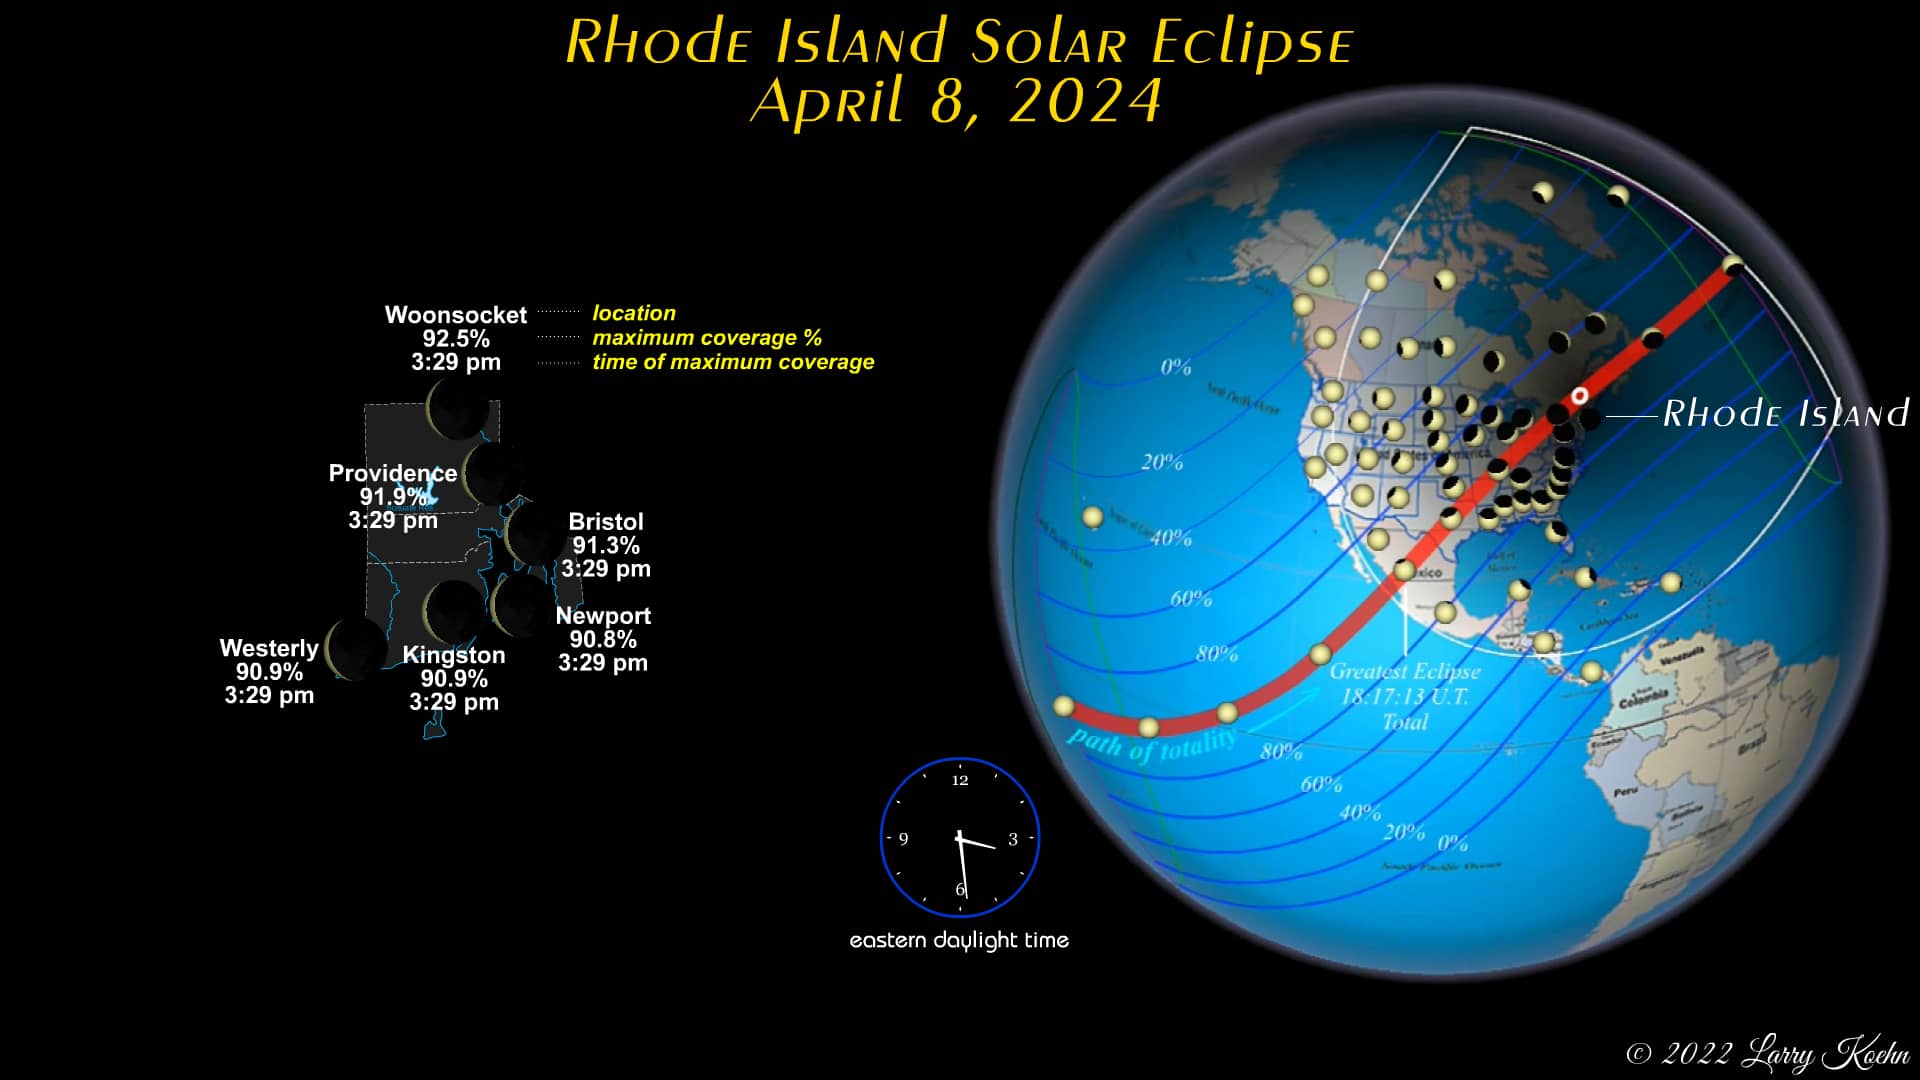 Rhode Island Solar Eclipse April 8, 2024 on Vimeo